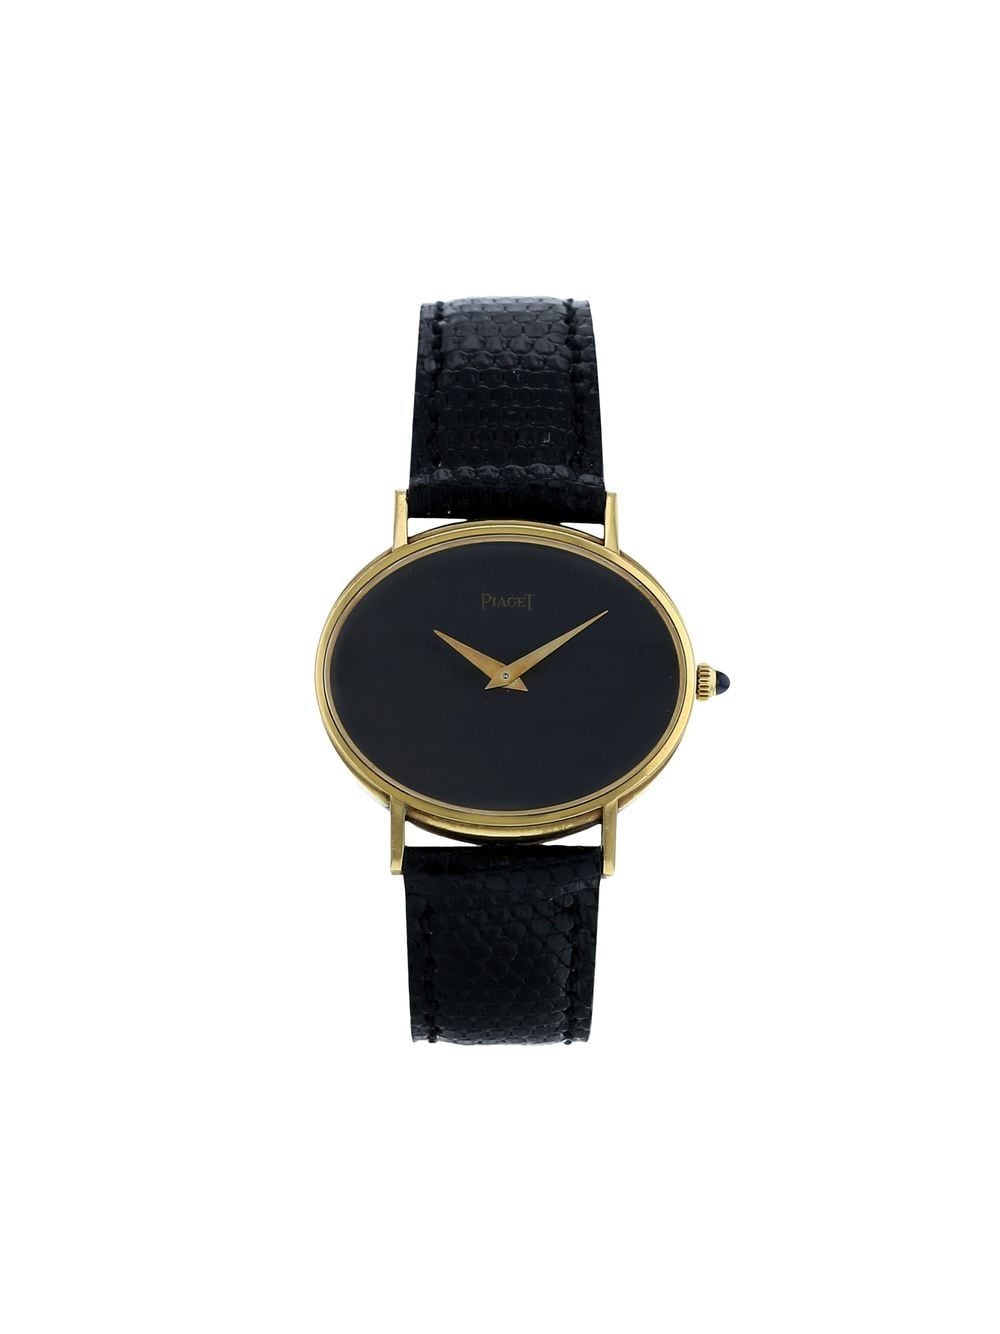 Piaget 1970s pre-owned Vintage Armbanduhr 31mm - Schwarz von Piaget